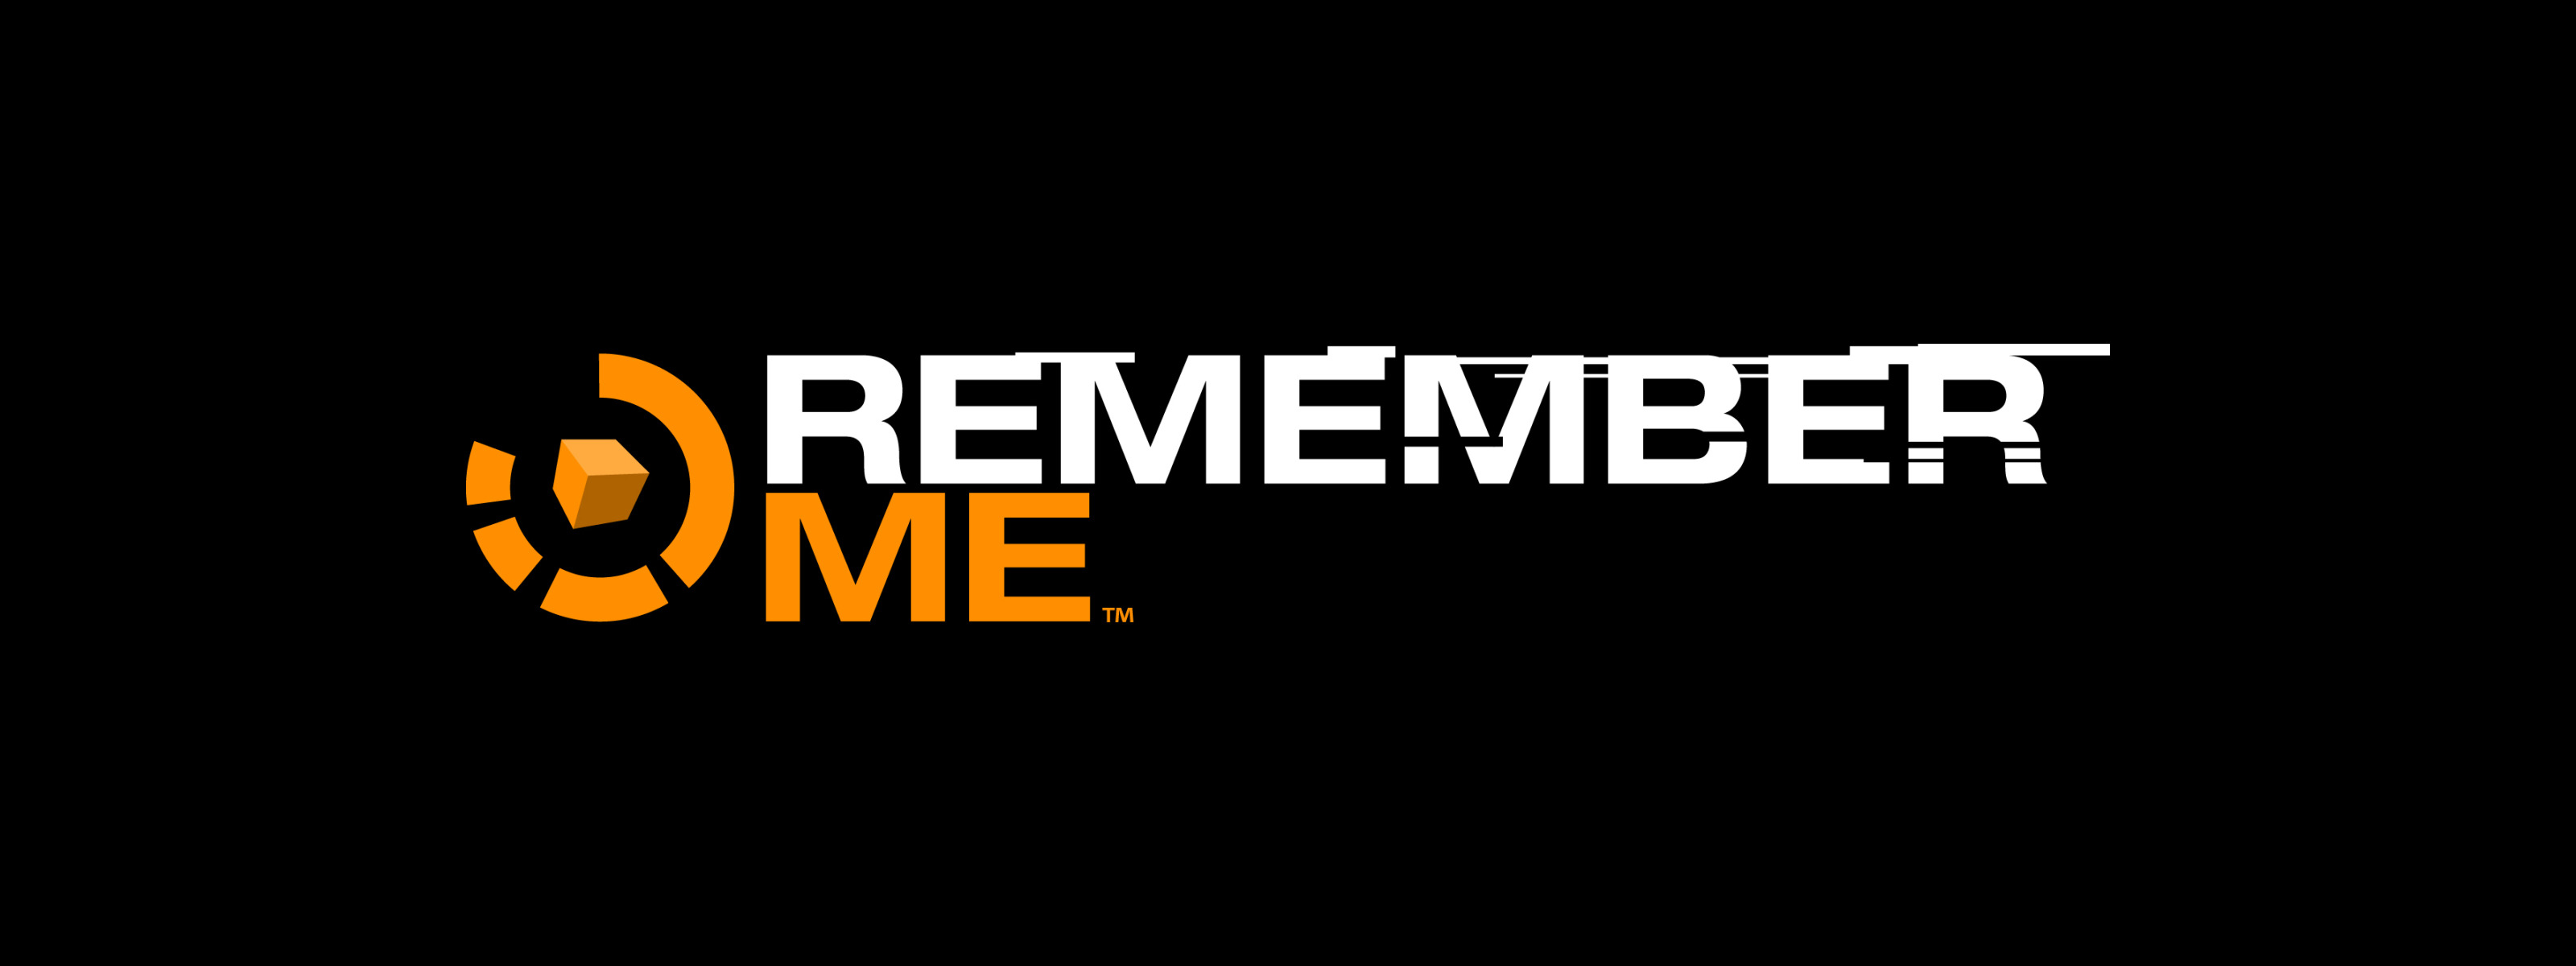 Сайт remember remember get. Remember me. Remember me значок. Remember надпись. Remember me memorize logo.